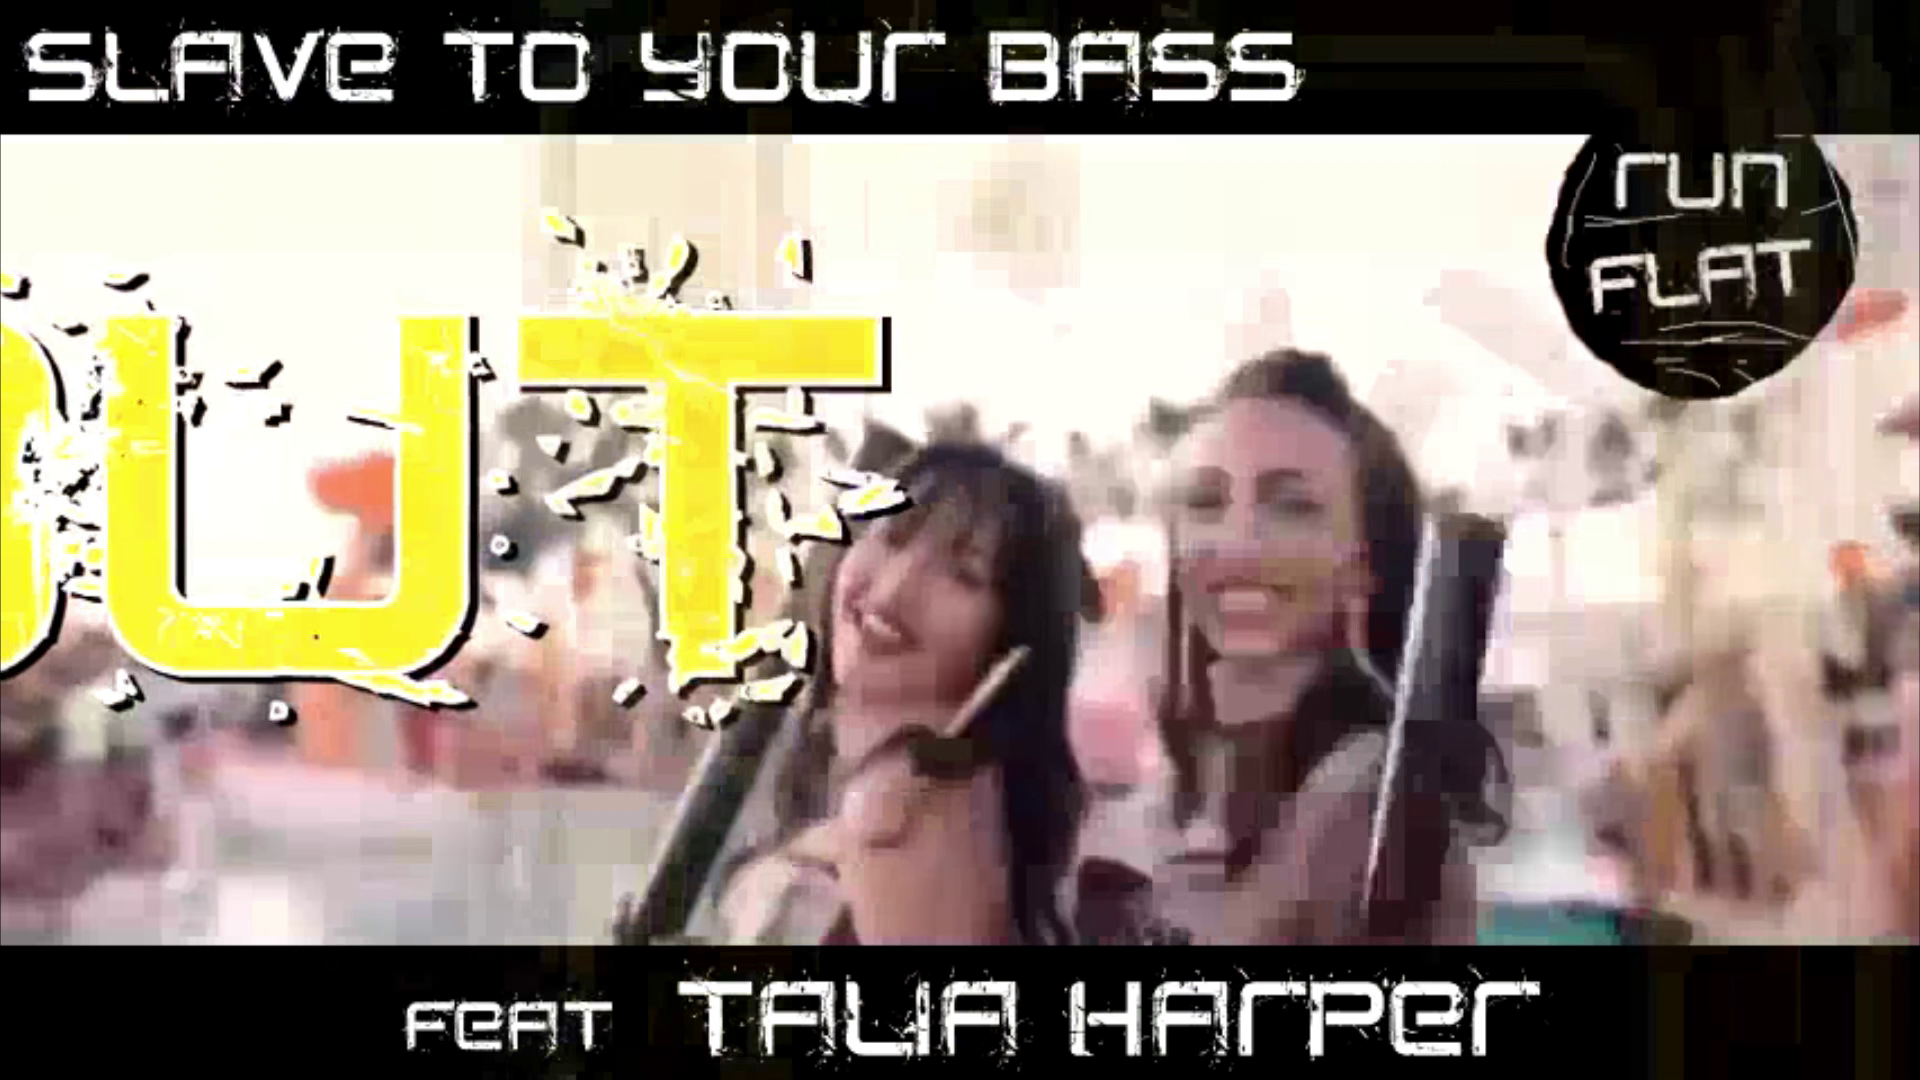 Run Flat feat Talia 'Slave to your Bass